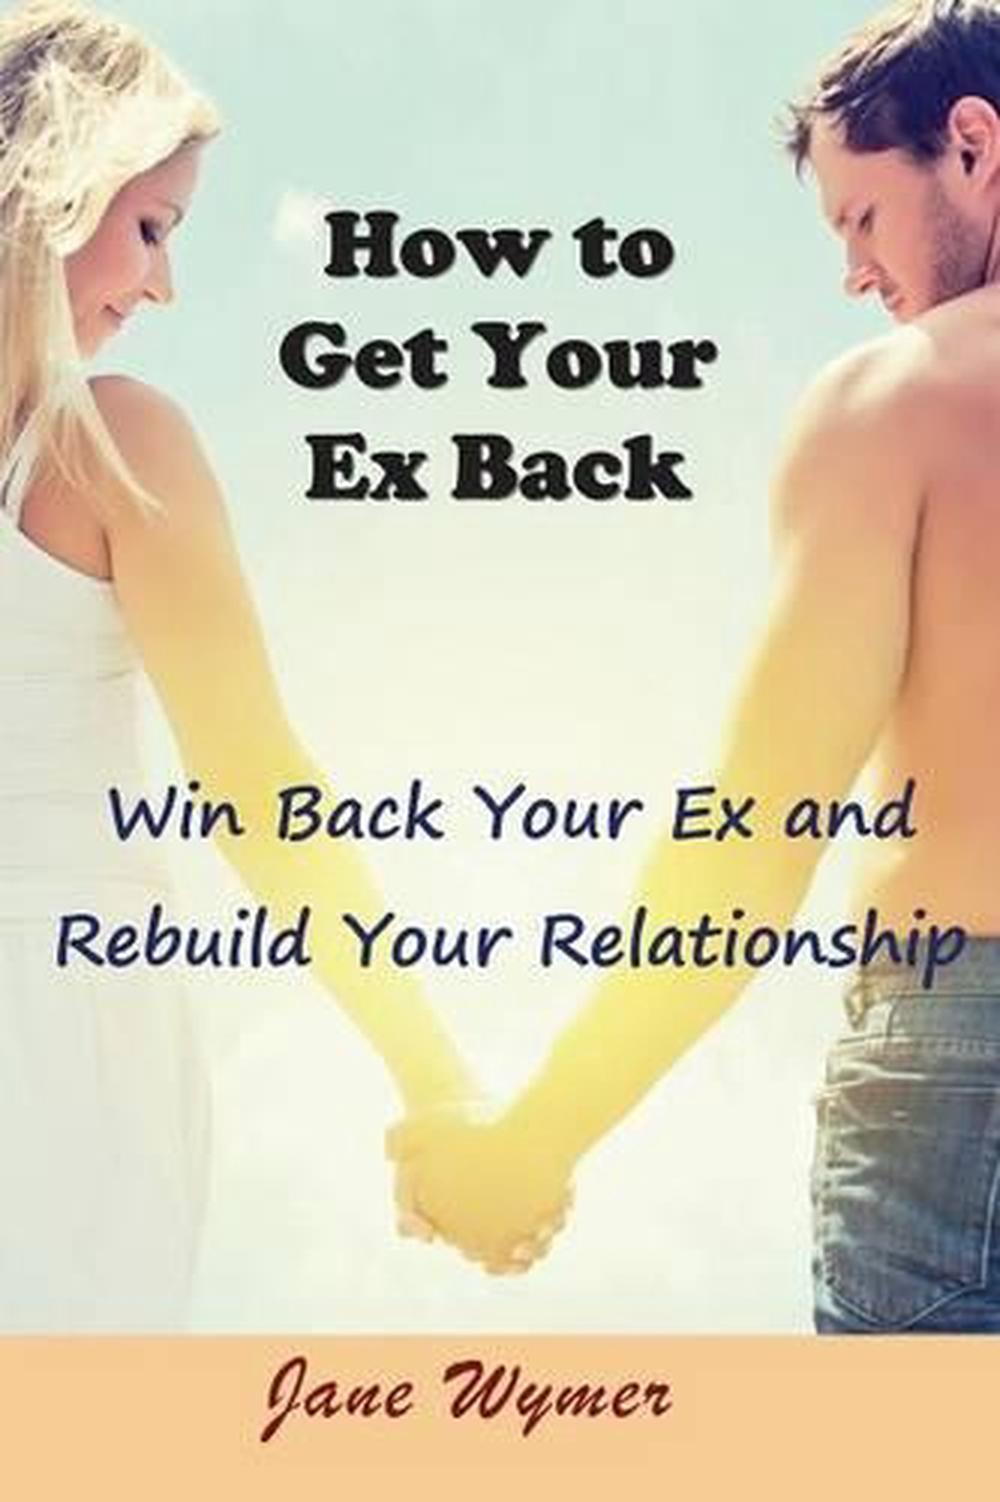 Ex back. Win back ex girlfriend.